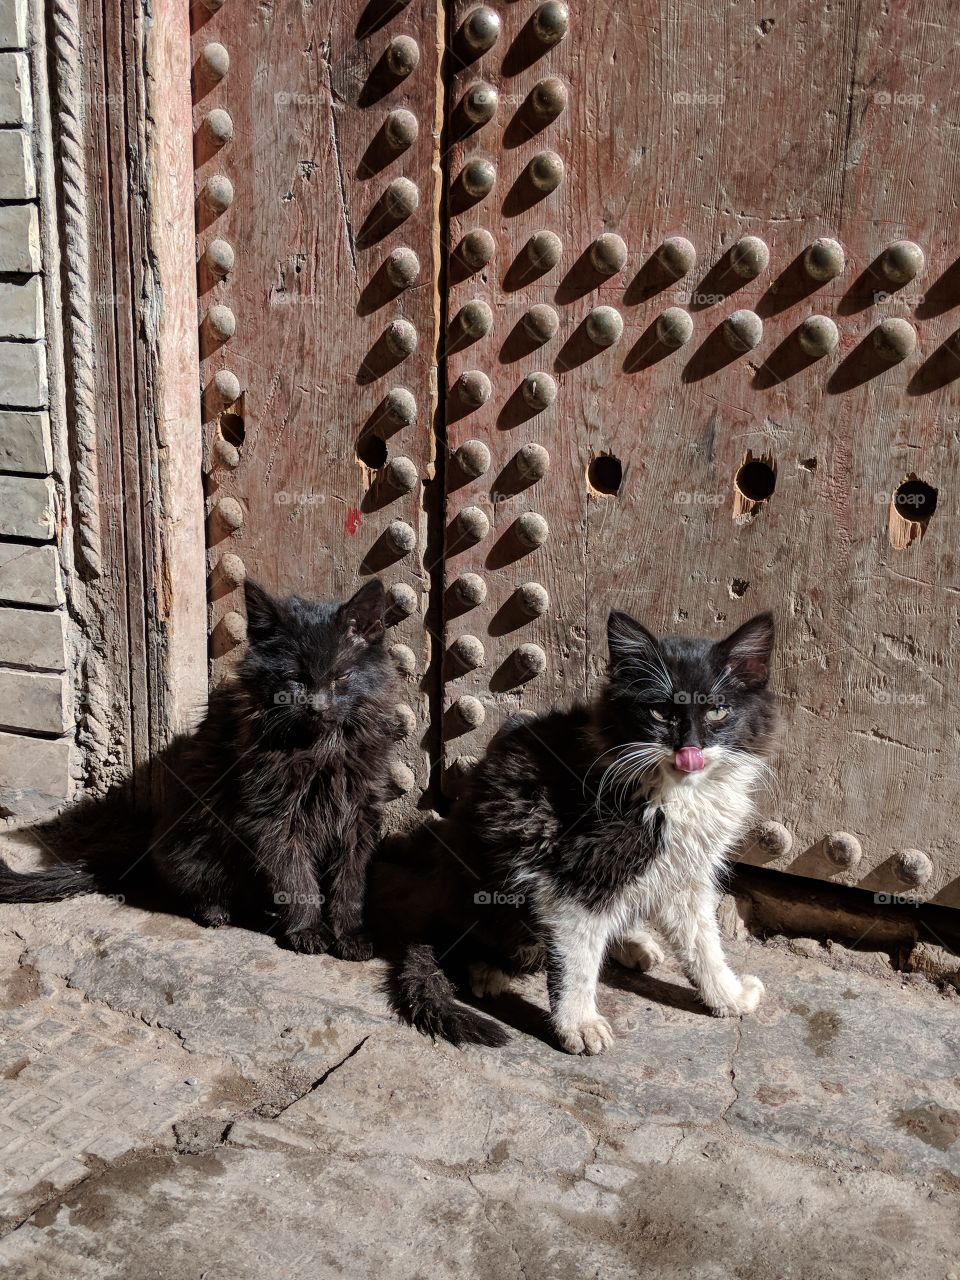 Street kitties, funny faces, in the Medina of Marrakech